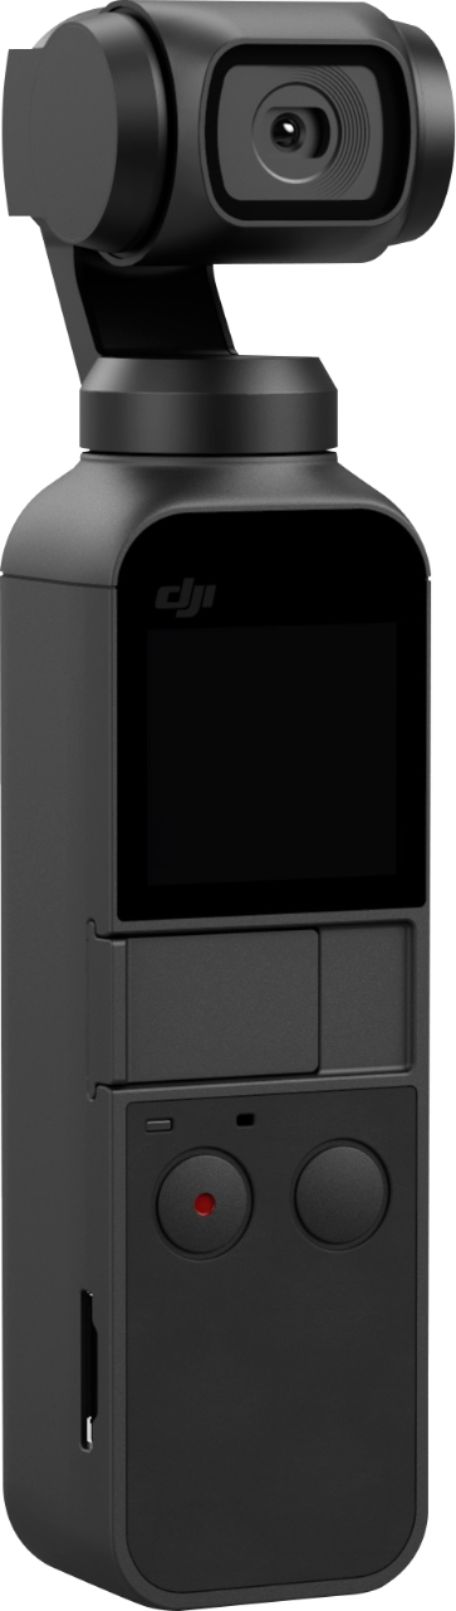 wang Beginner commentaar DJI Osmo Pocket 4K Action Camera Matte Black CP.ZM.00000097.02 - Best Buy